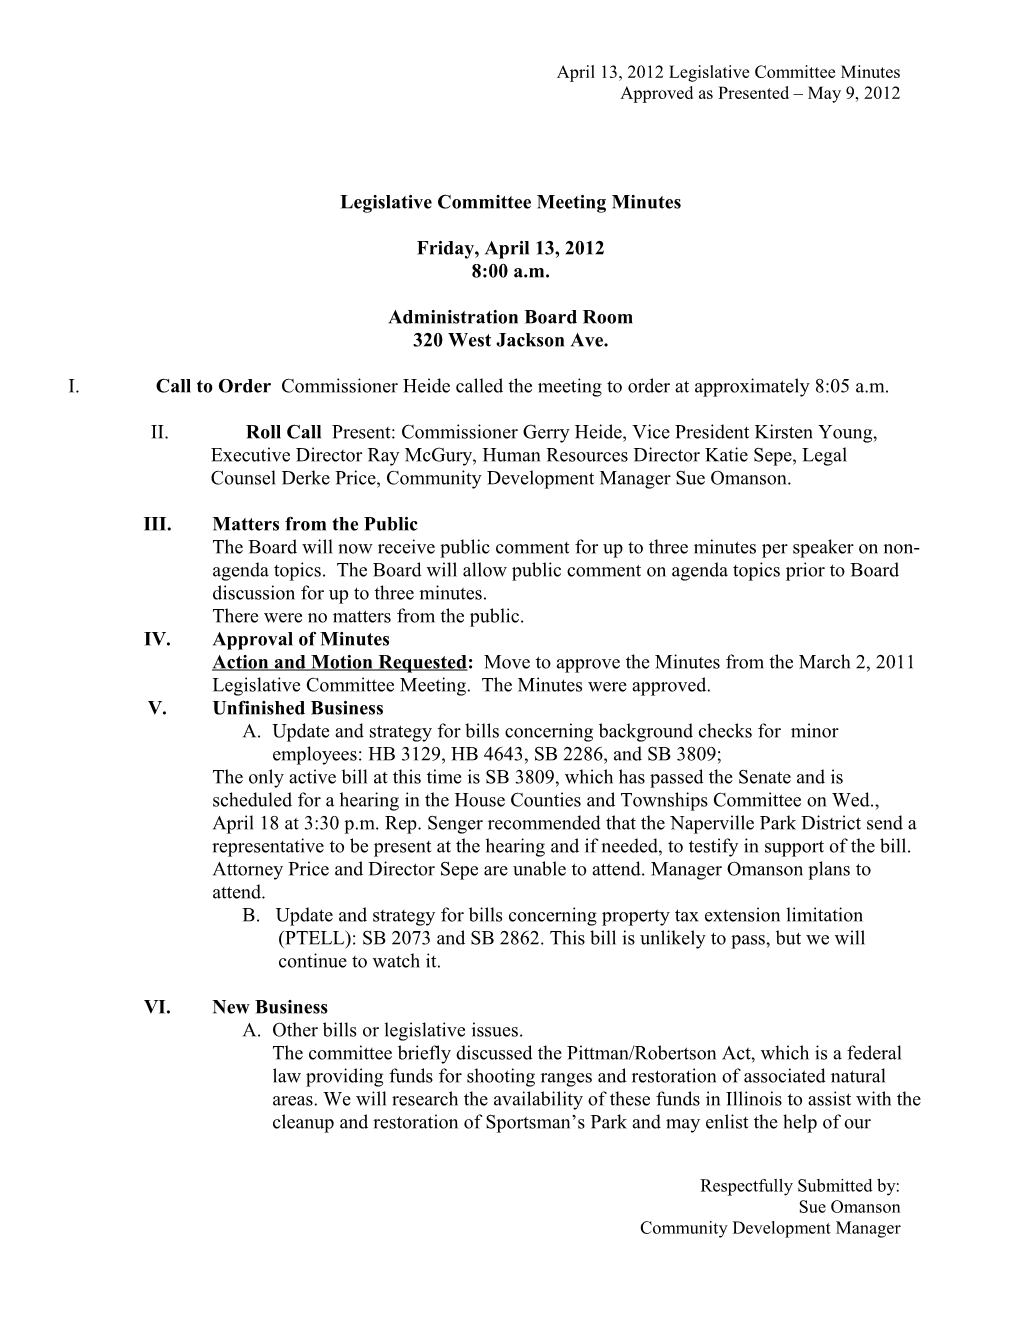 Legislative Committee Meeting Minutes